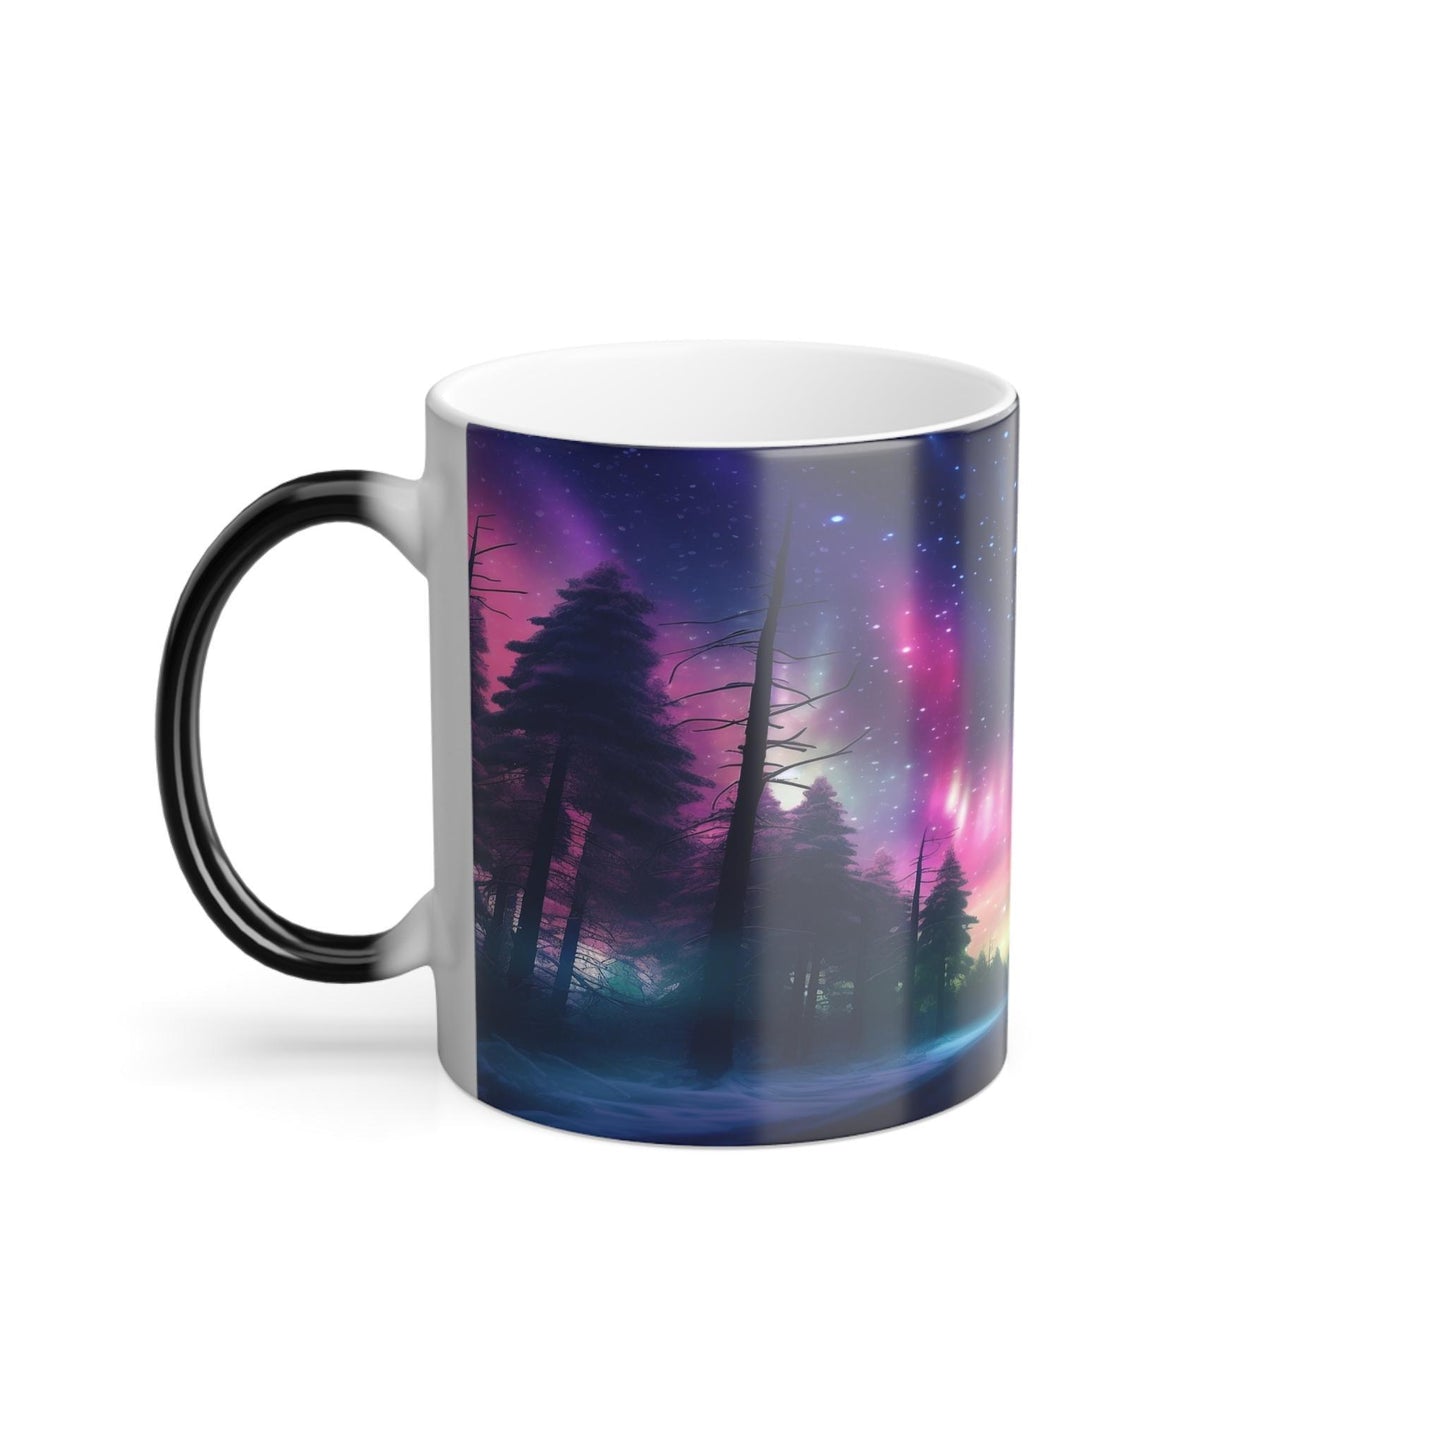 Enchanting Aurora Borealis Heat Sensitive Mug - Northern Lights Magic Color Morphing Mug 11oz - Heat Reactive Night Sky Coffee Cup - Perfect Gift for Nature Lovers 13